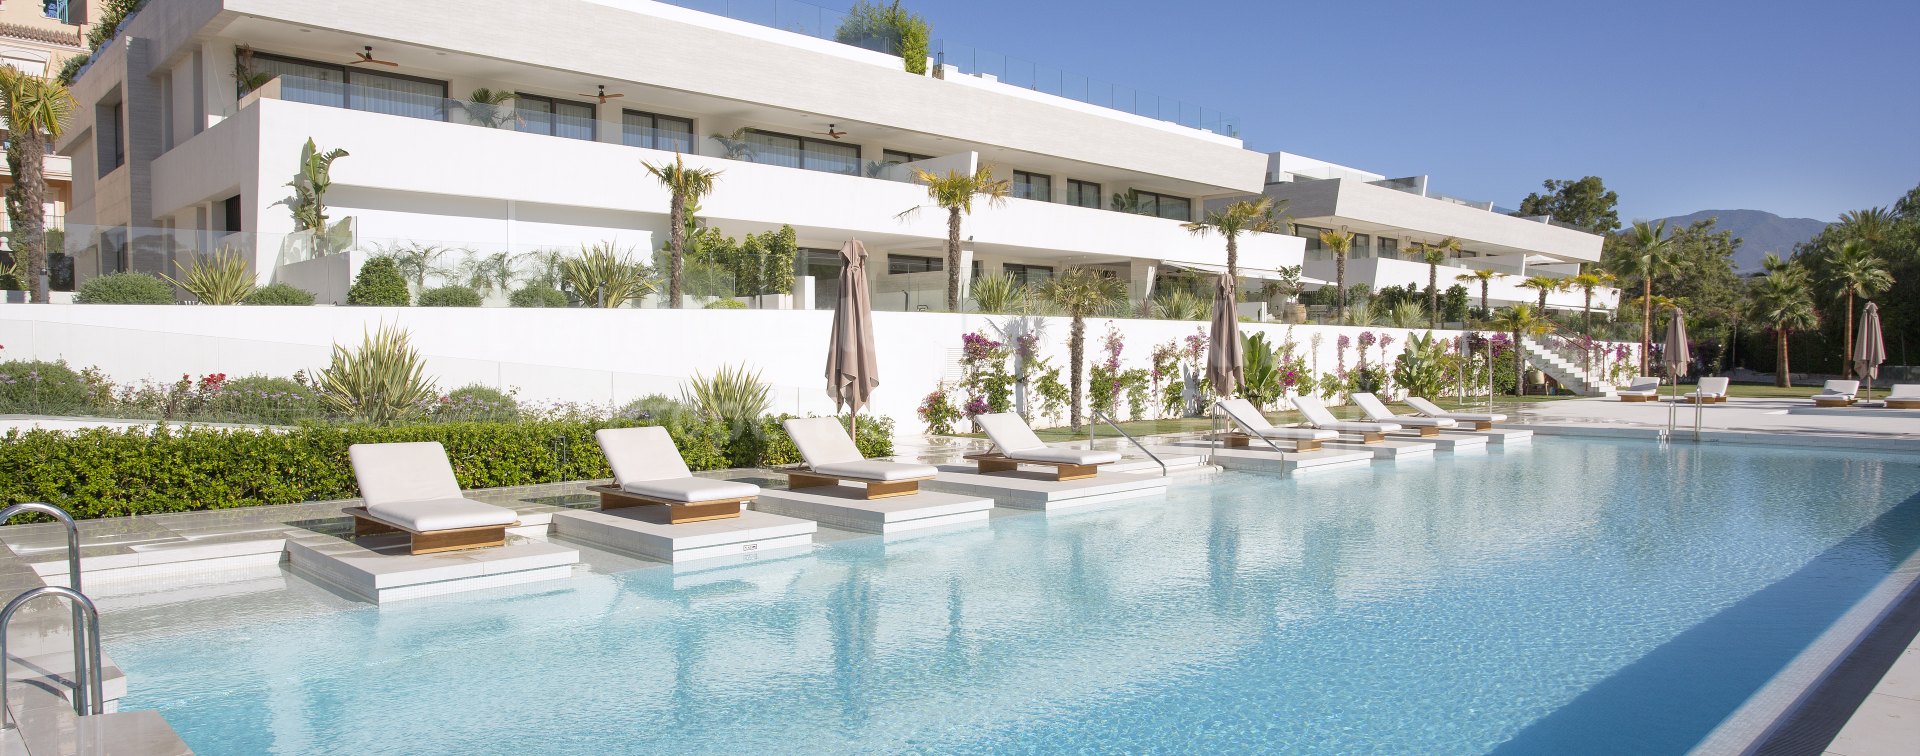 Epic Marbella, Atemberaubendes Penthouse mit Meerblick an der Goldenen Meile, Marbella